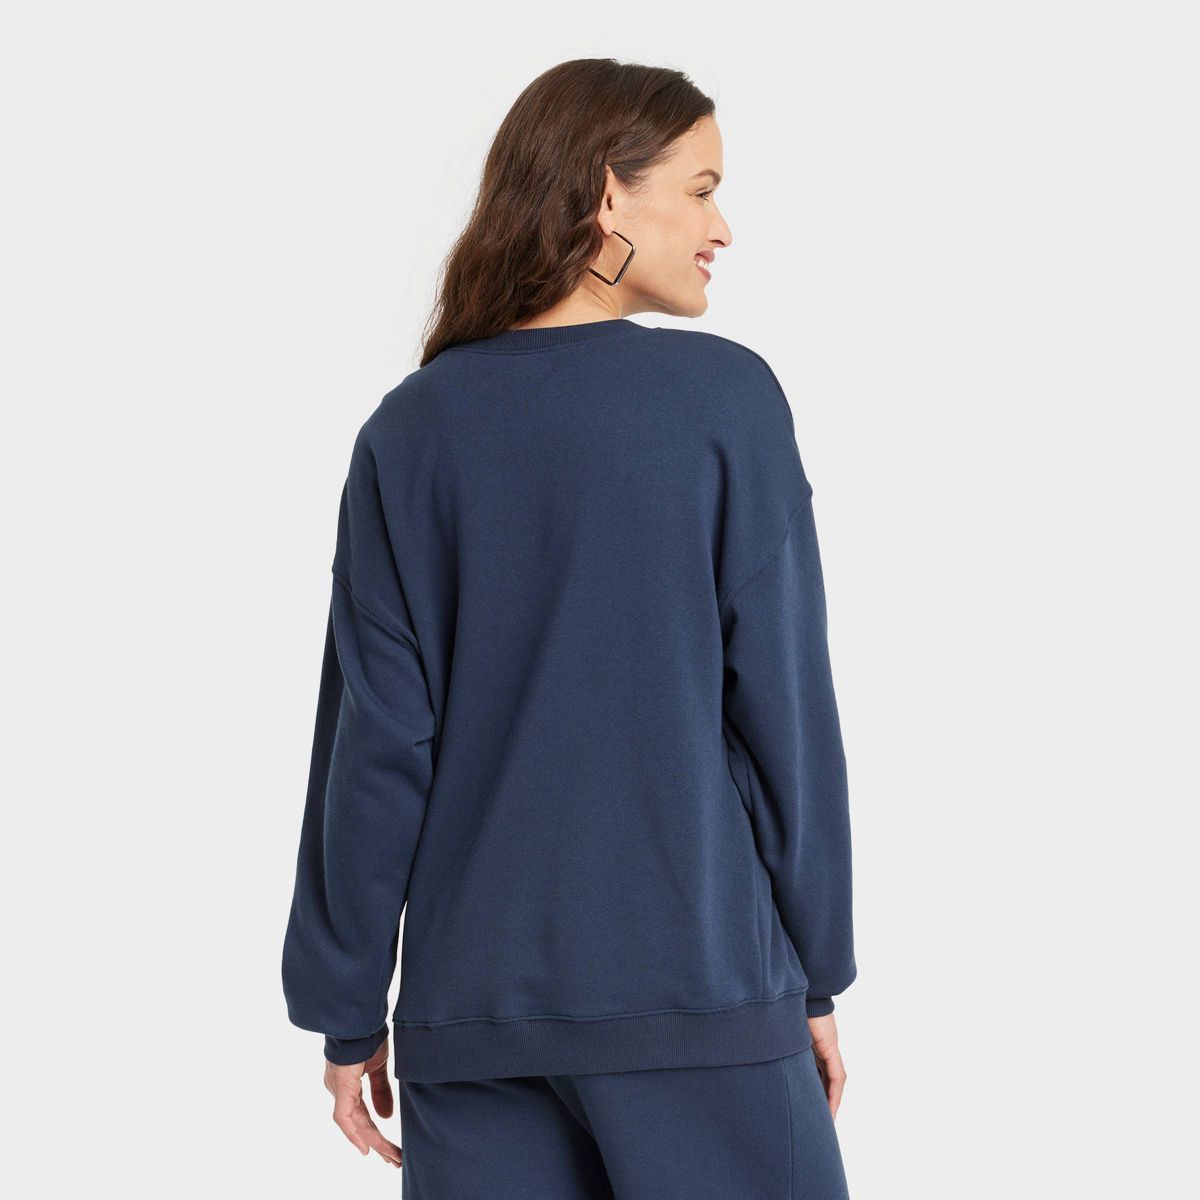 Women's Mom Graphic Sweatshirt - Blue | Target